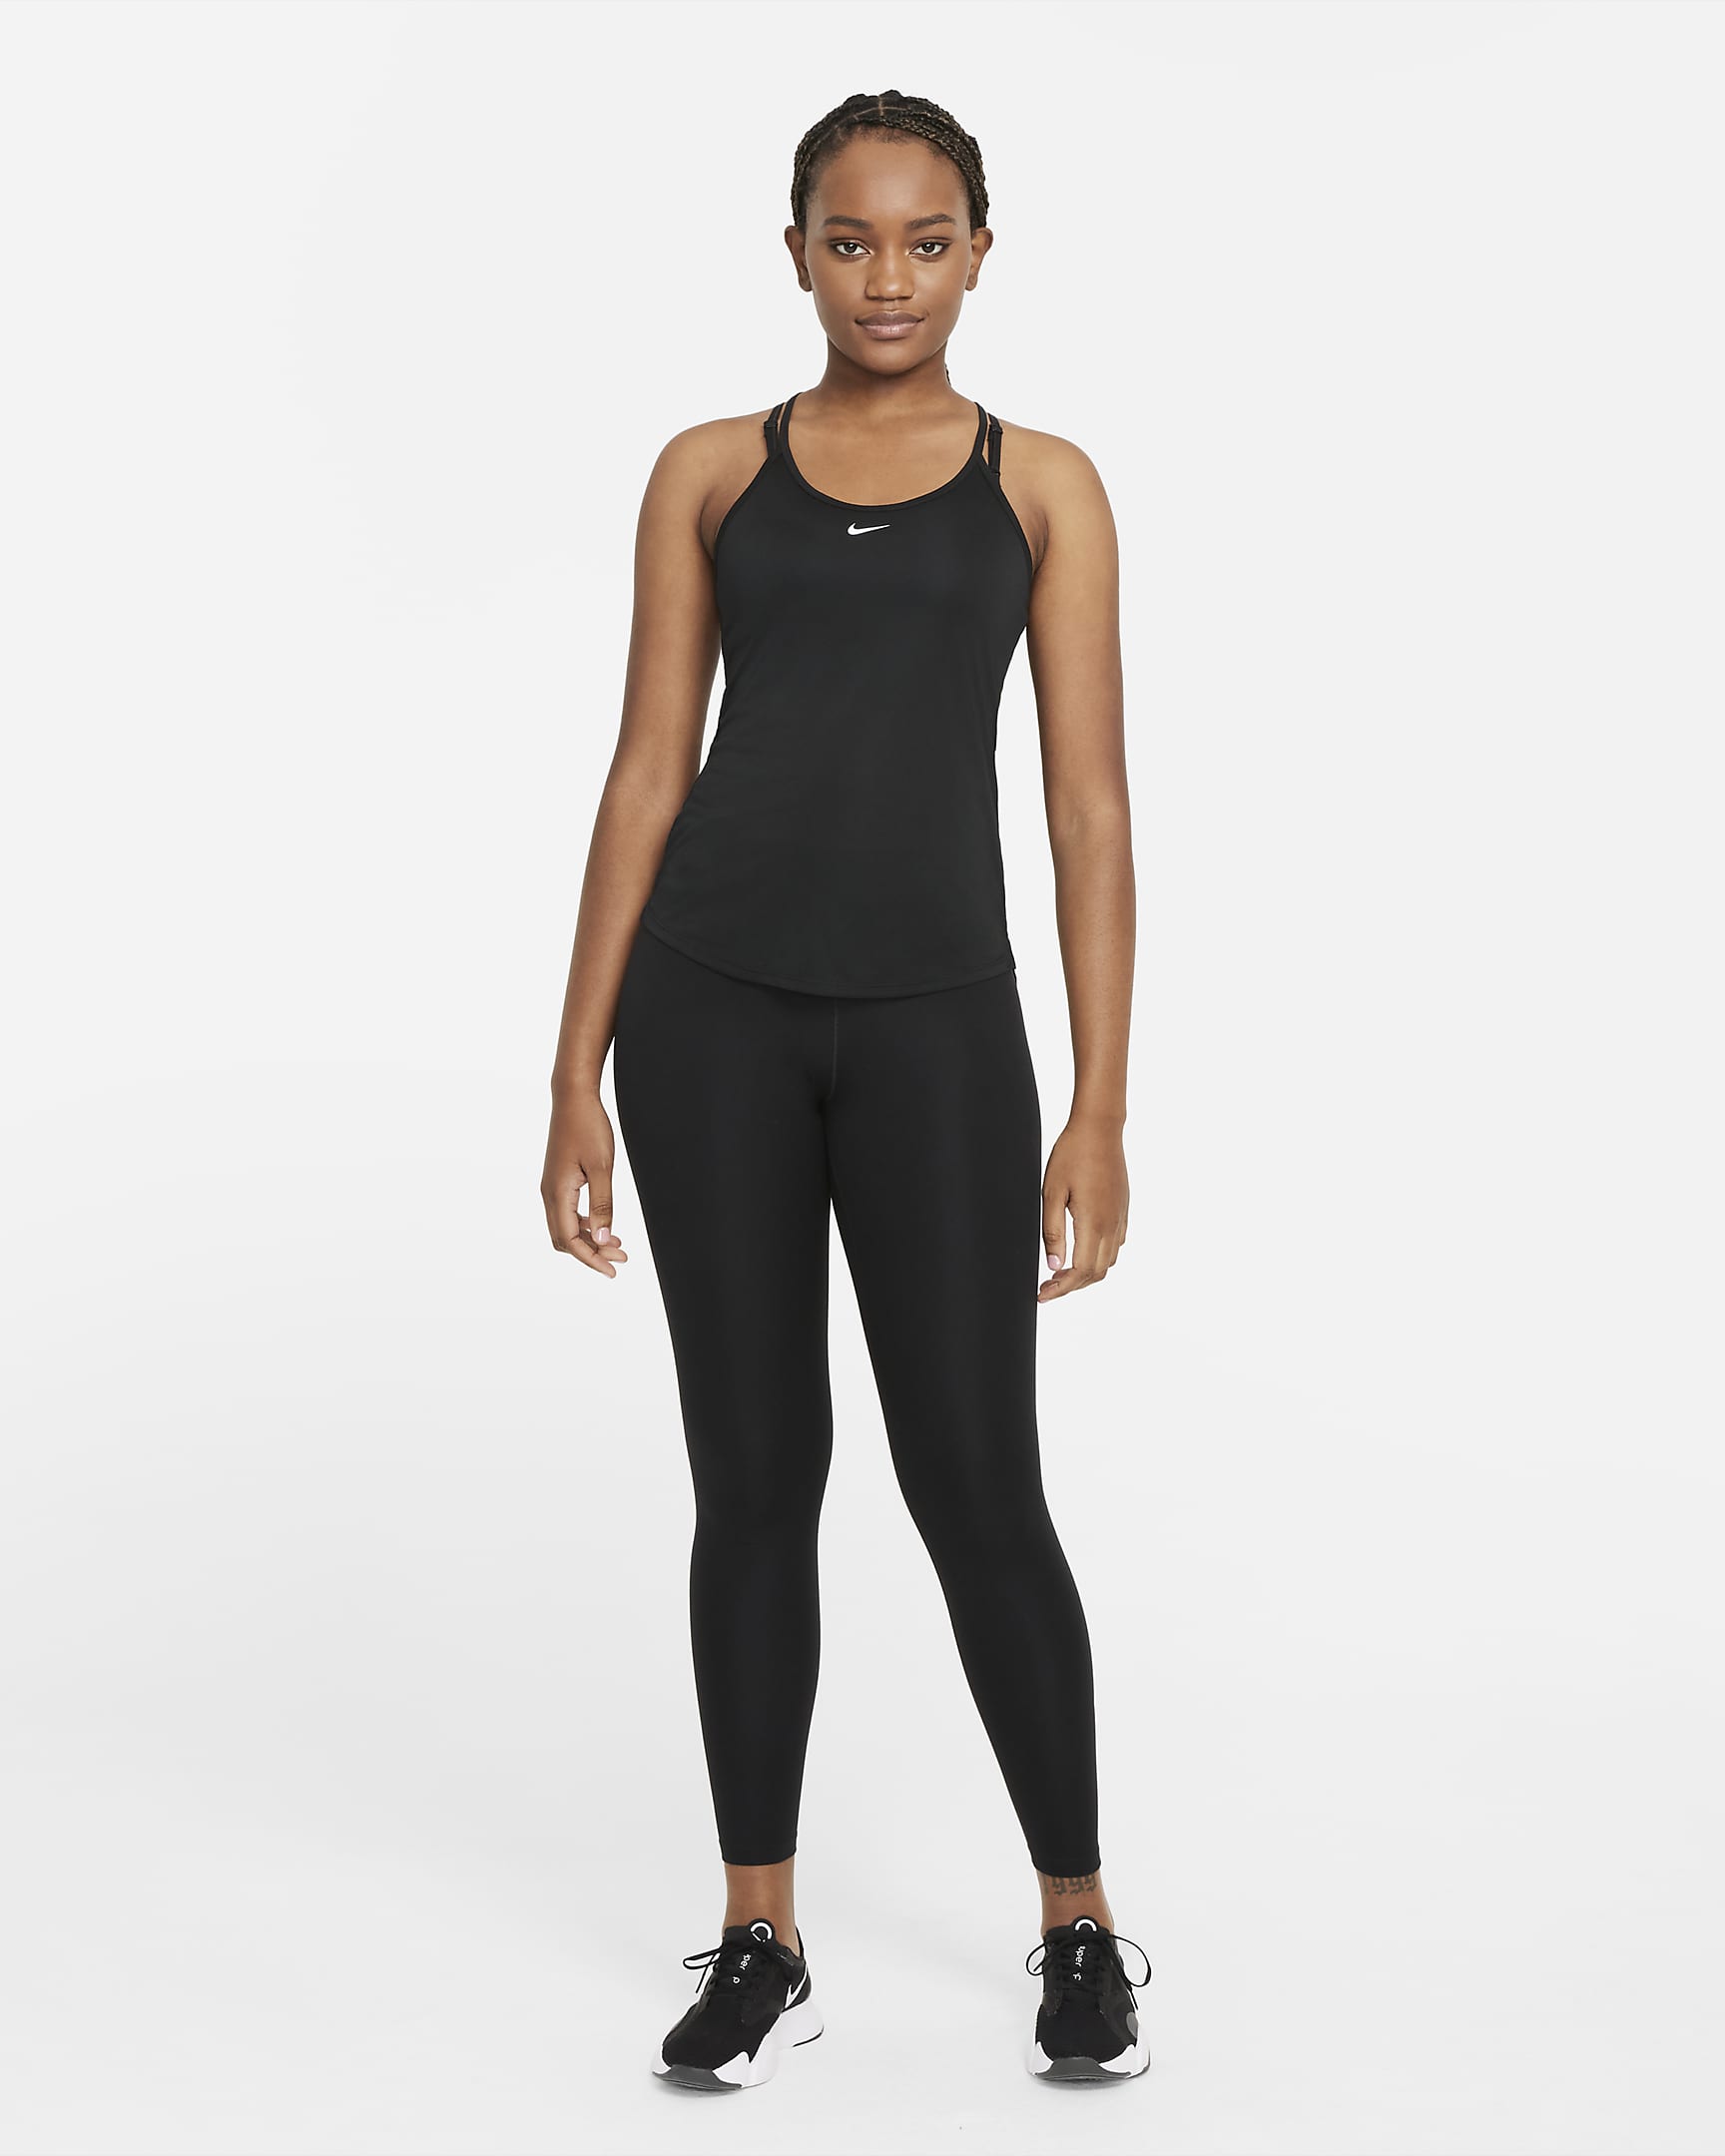 Nike Dri-FIT One Elastika Women's Standard Fit Tank Top - Black/White